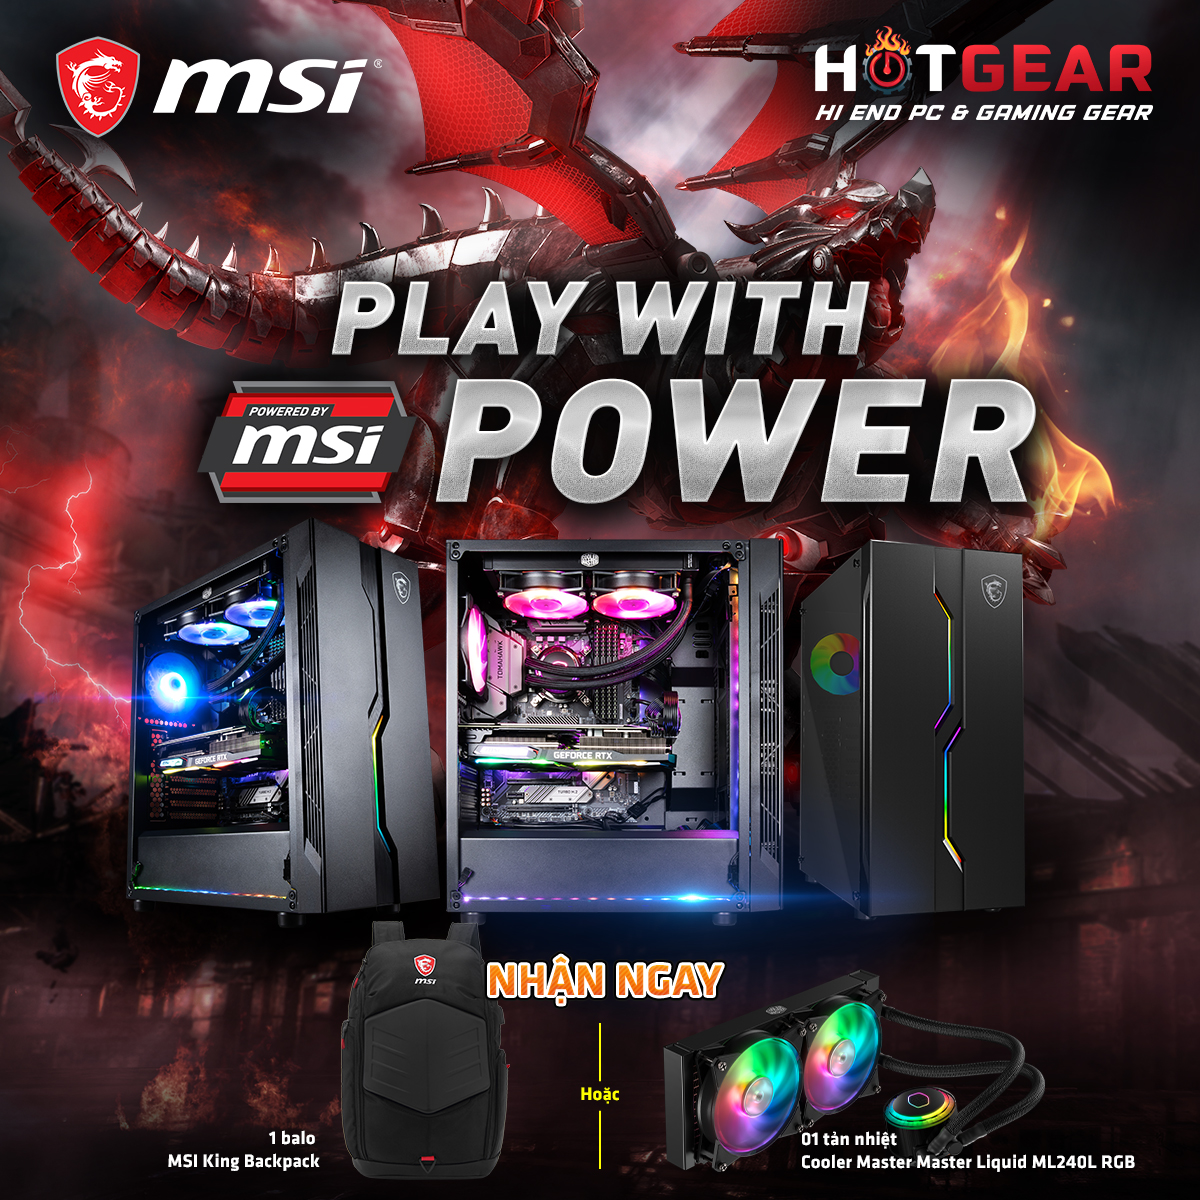 Hotgear deals - Msi Play With Power ( Tặng balo MSI, tặng tản nhiệt nước Cooler master, tặng rồng MSI )